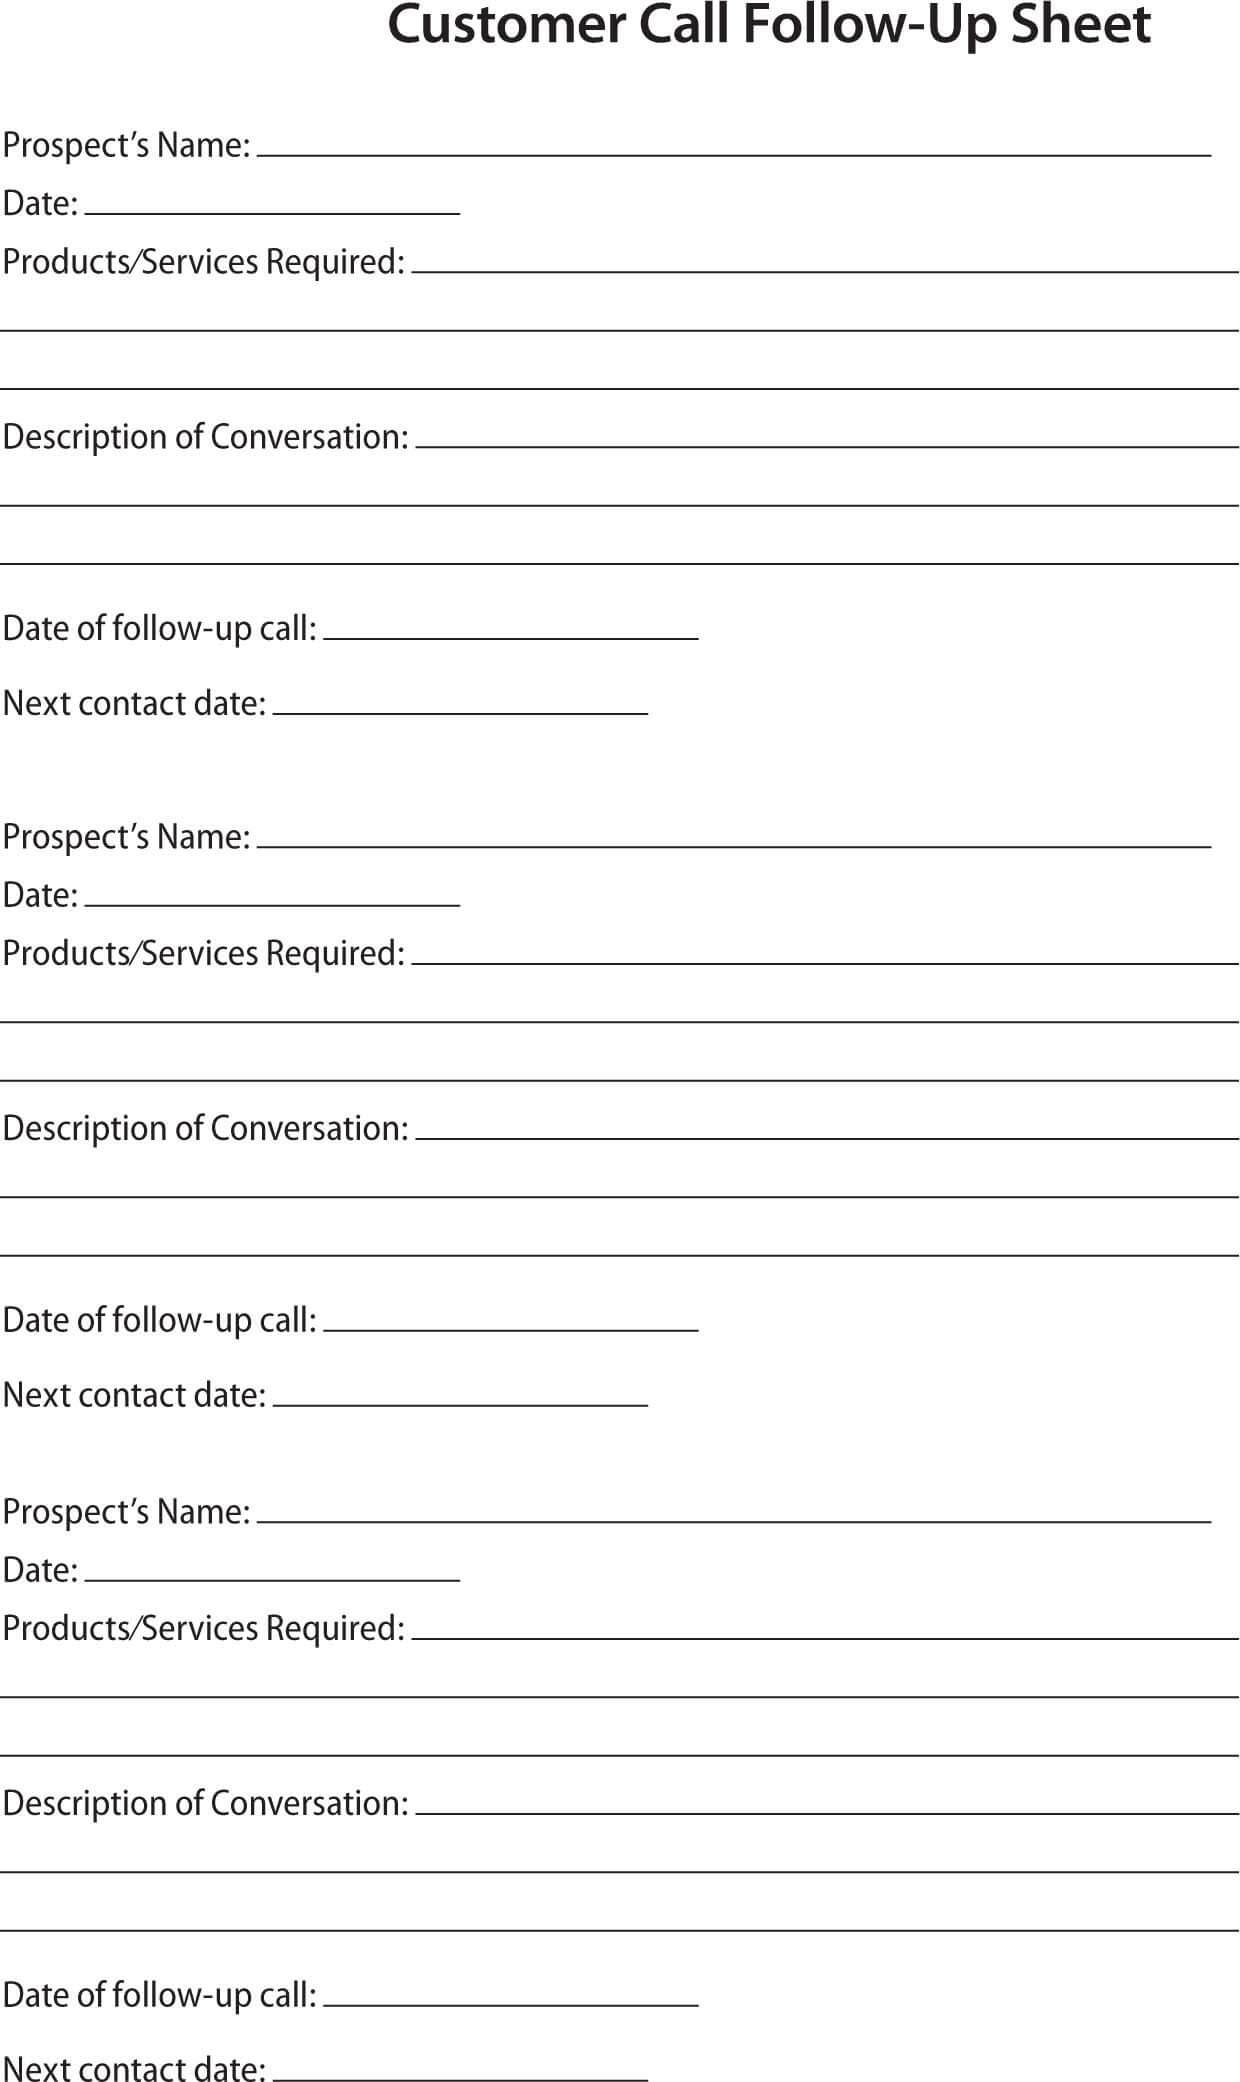 80 20 Prospect Sheet Customer Call Follow Up | Templates With Regard To Customer Contact Report Template